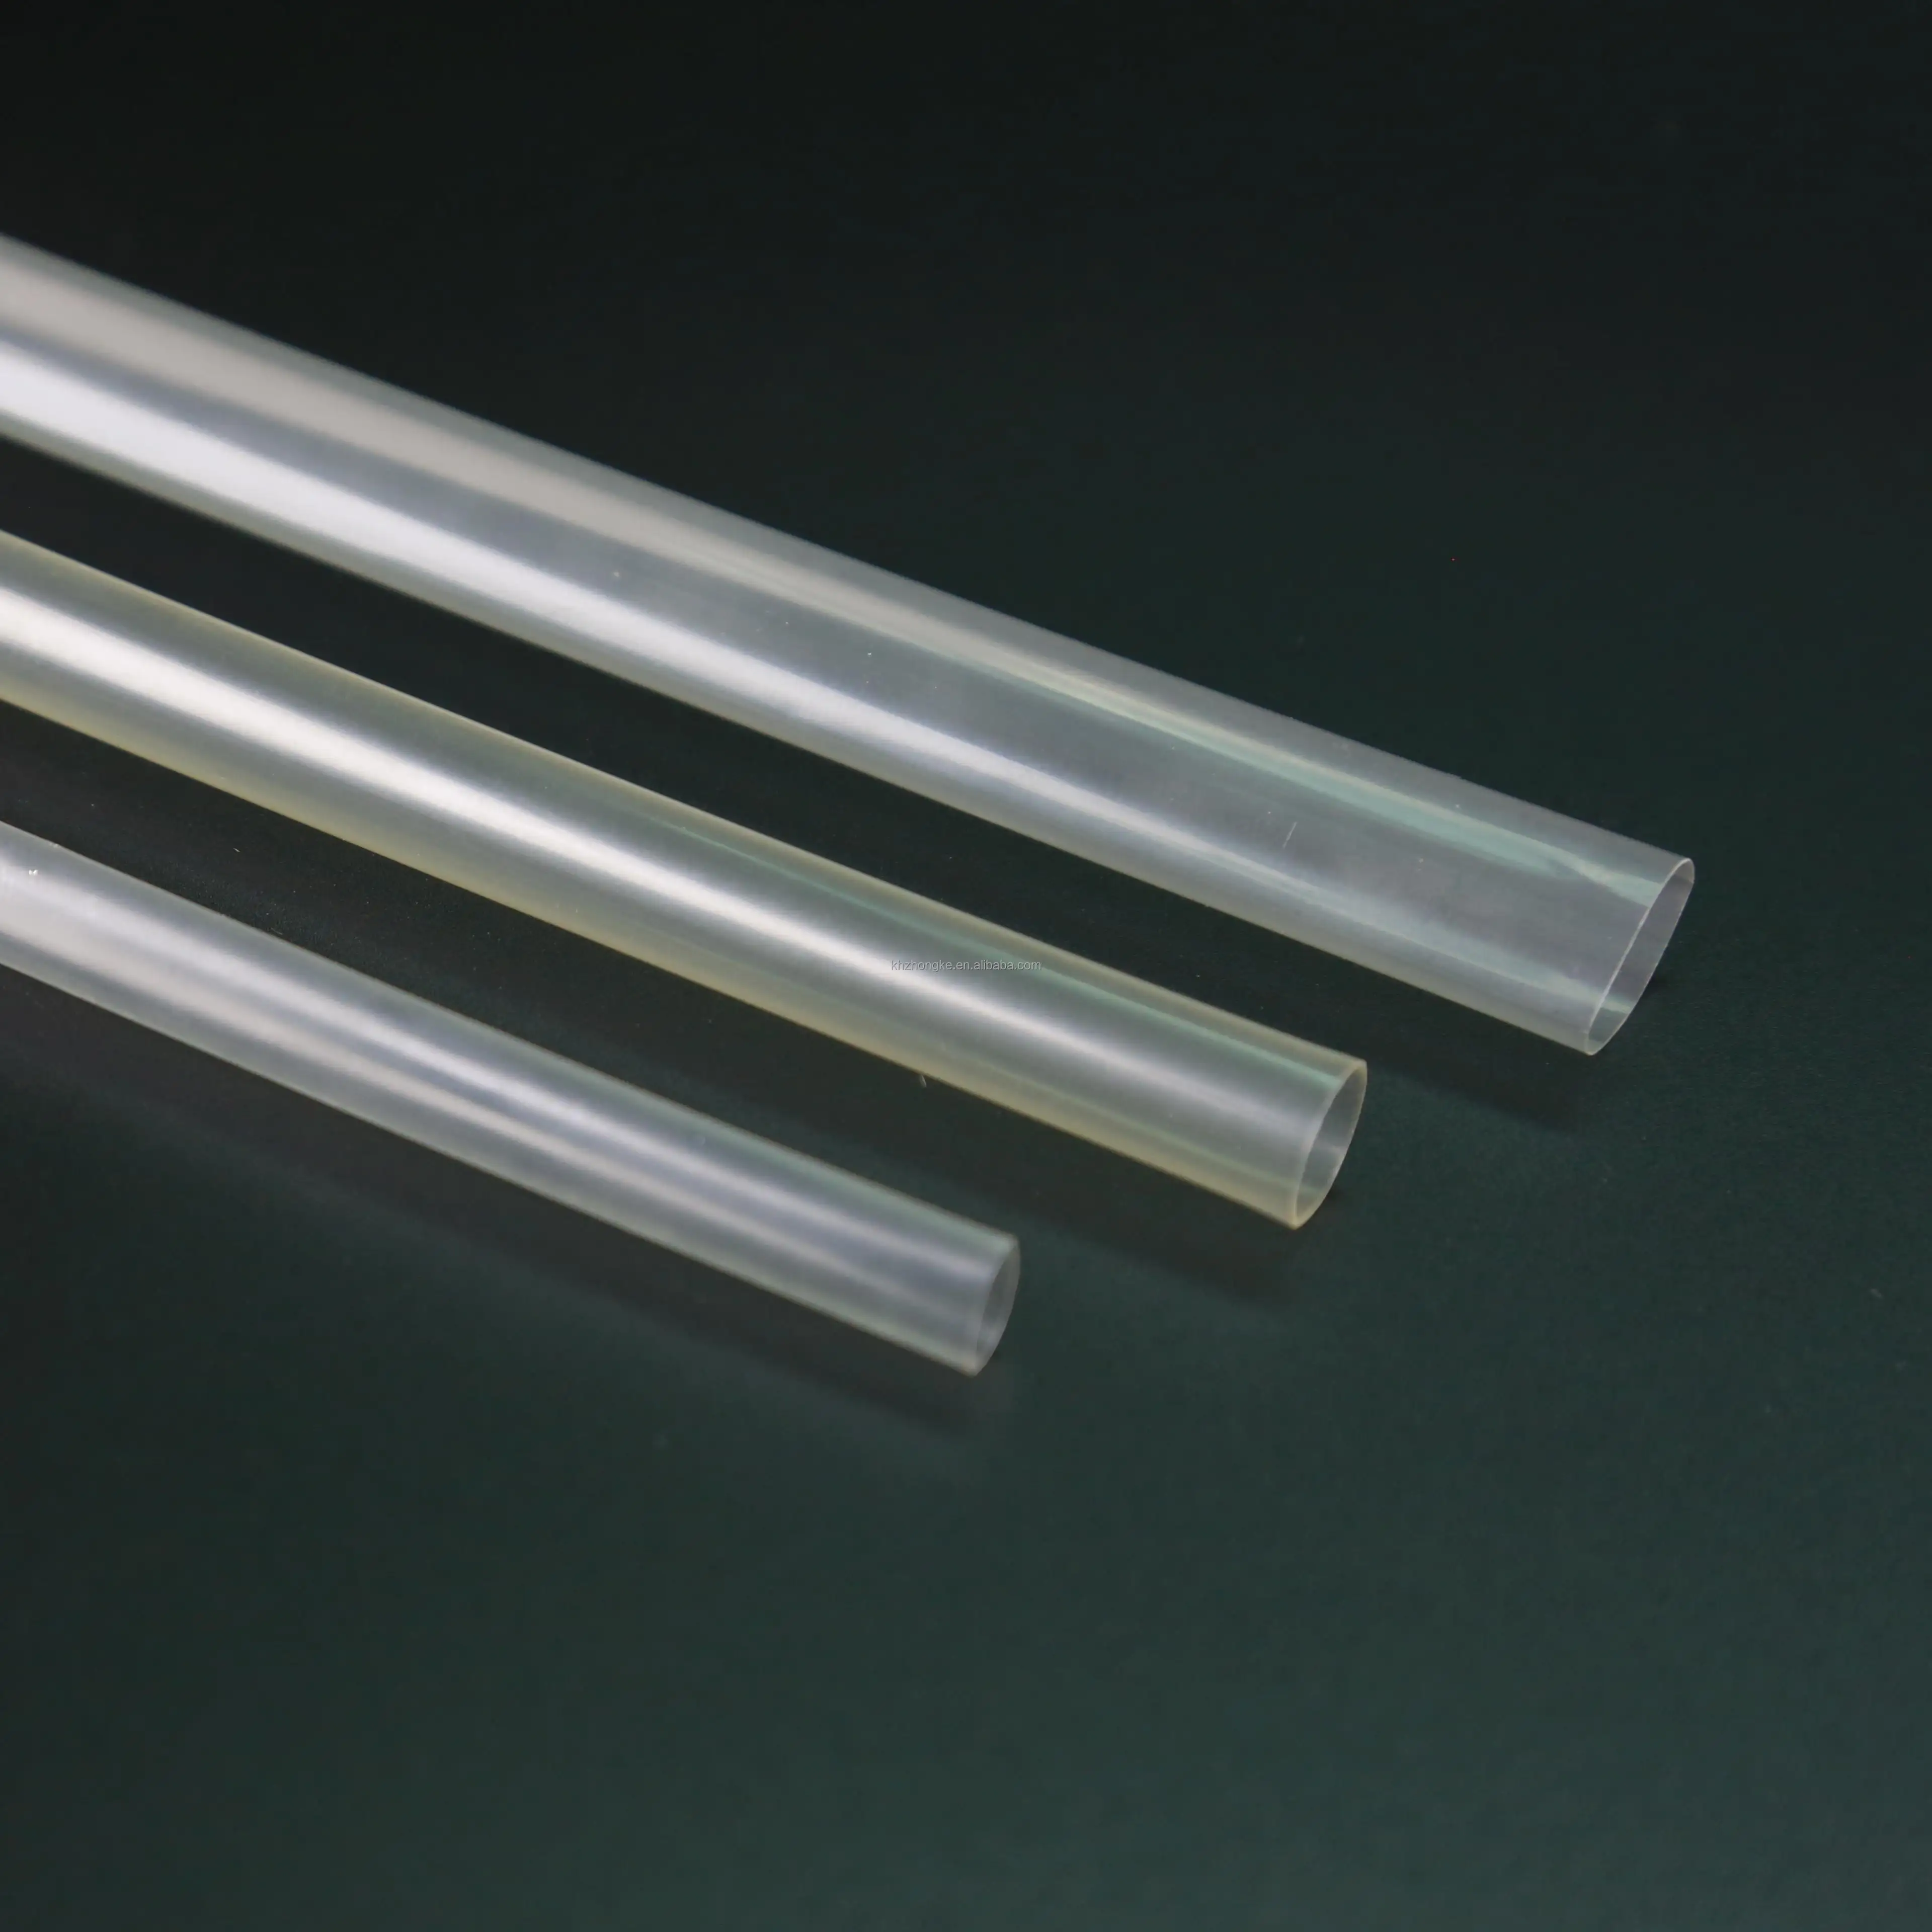 Military Standard Professional Grade Clear Semi-Rigid Flame Retardant Fluoropolymer Tubing with High Quality